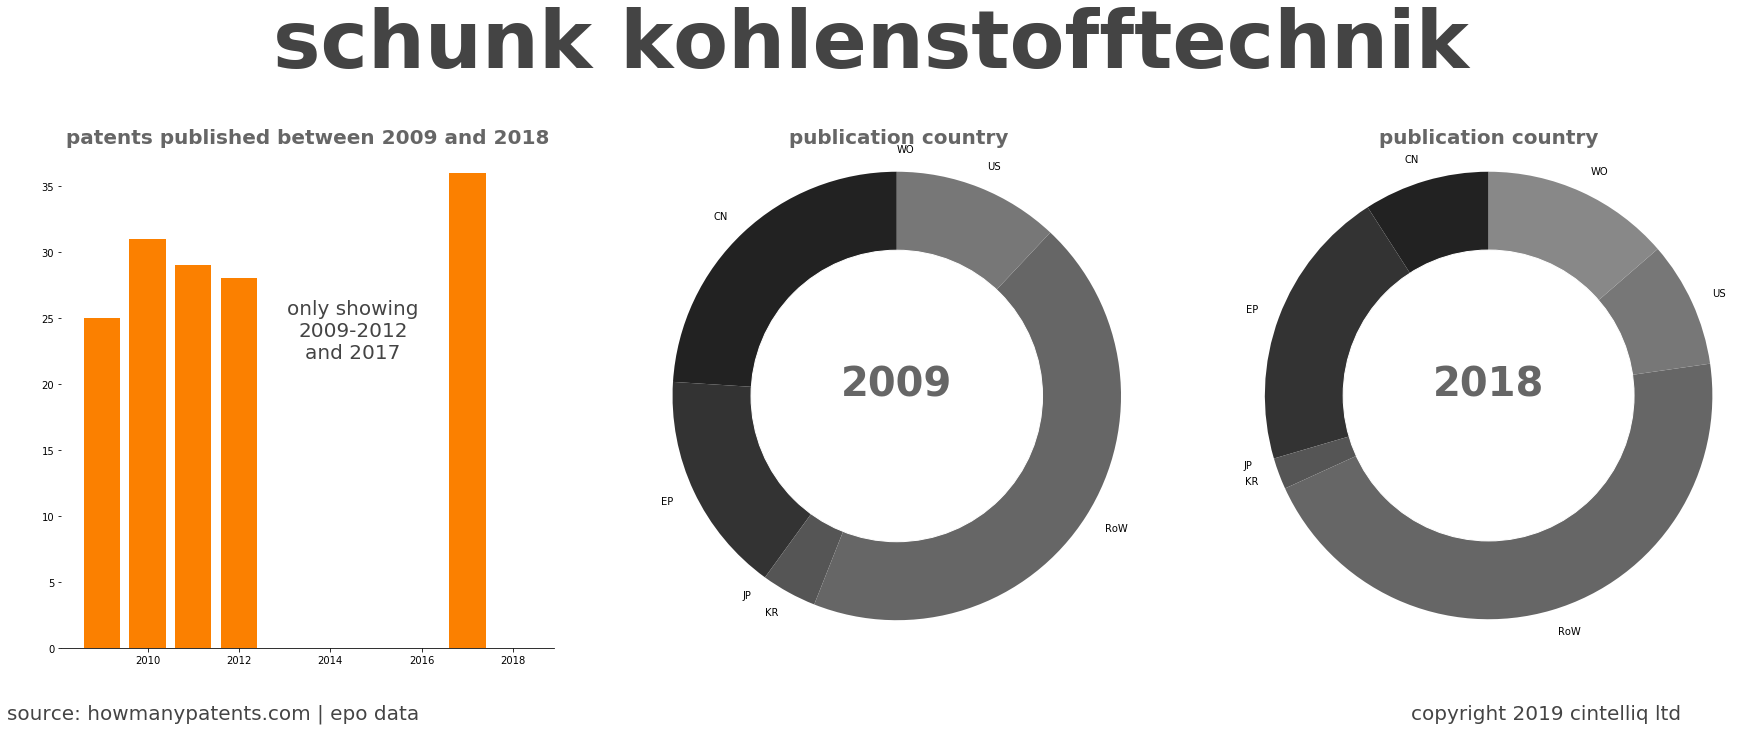 summary of patents for Schunk Kohlenstofftechnik